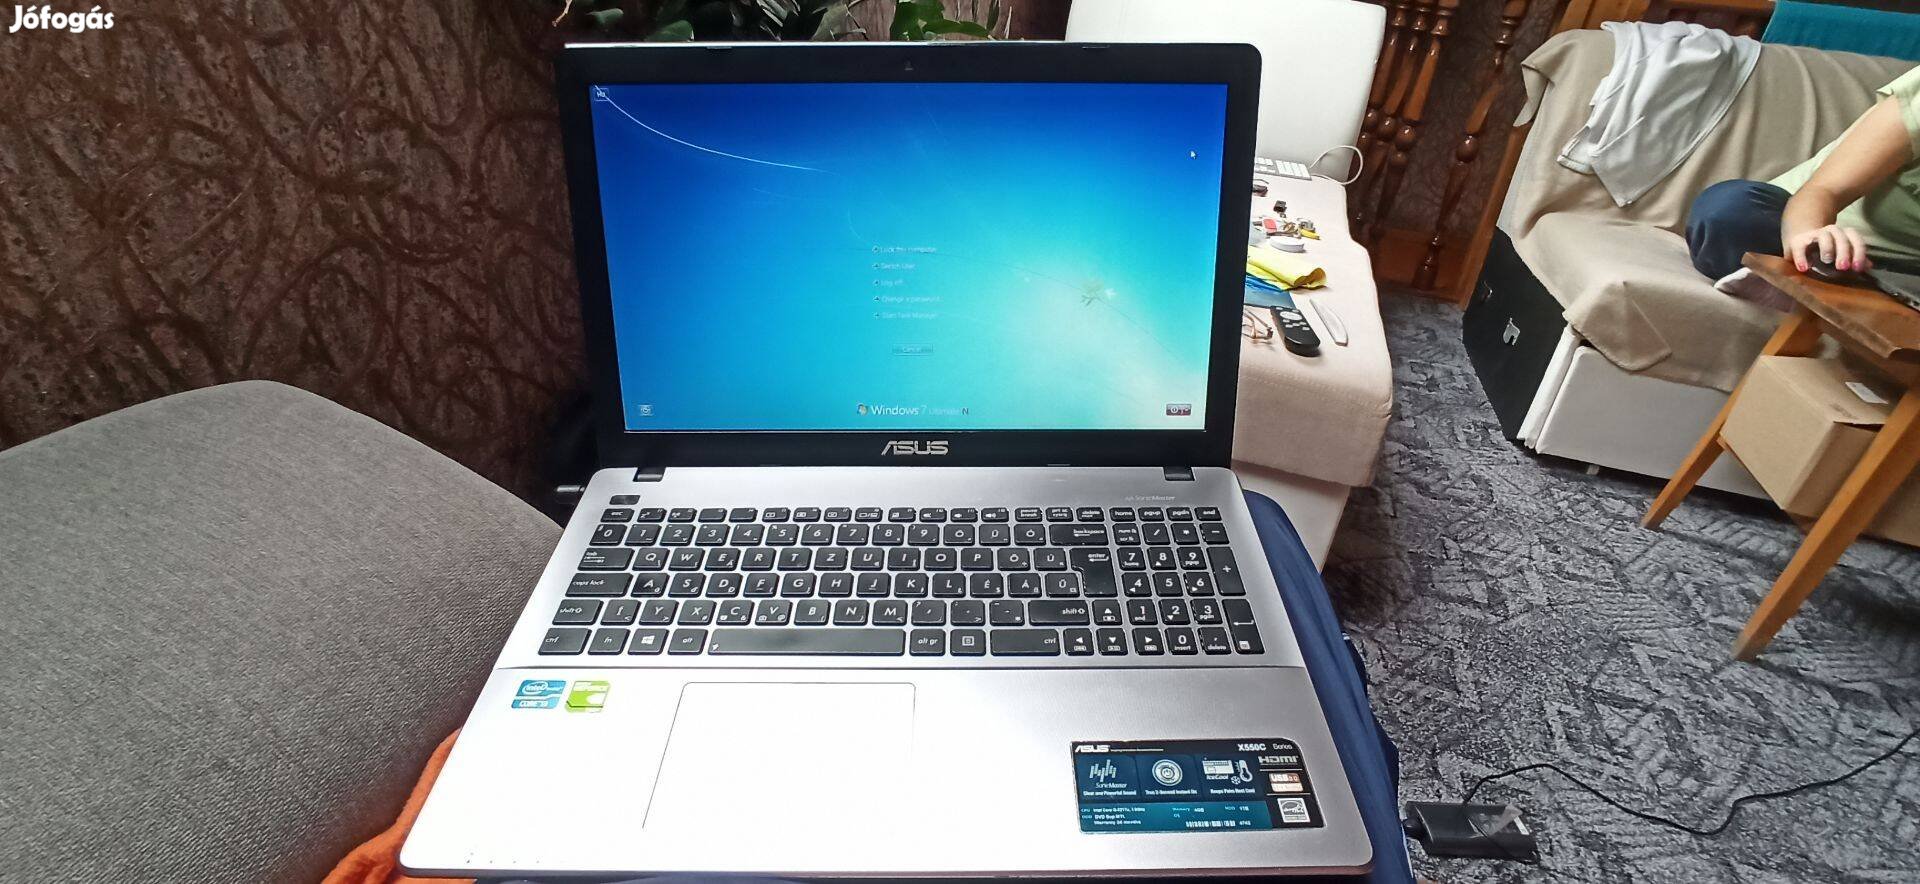 Asus X550C laptop, i3 4mag 1.8 Ghz, 8gb ram, 1 TB HDD, Nvidia 2 gb vid